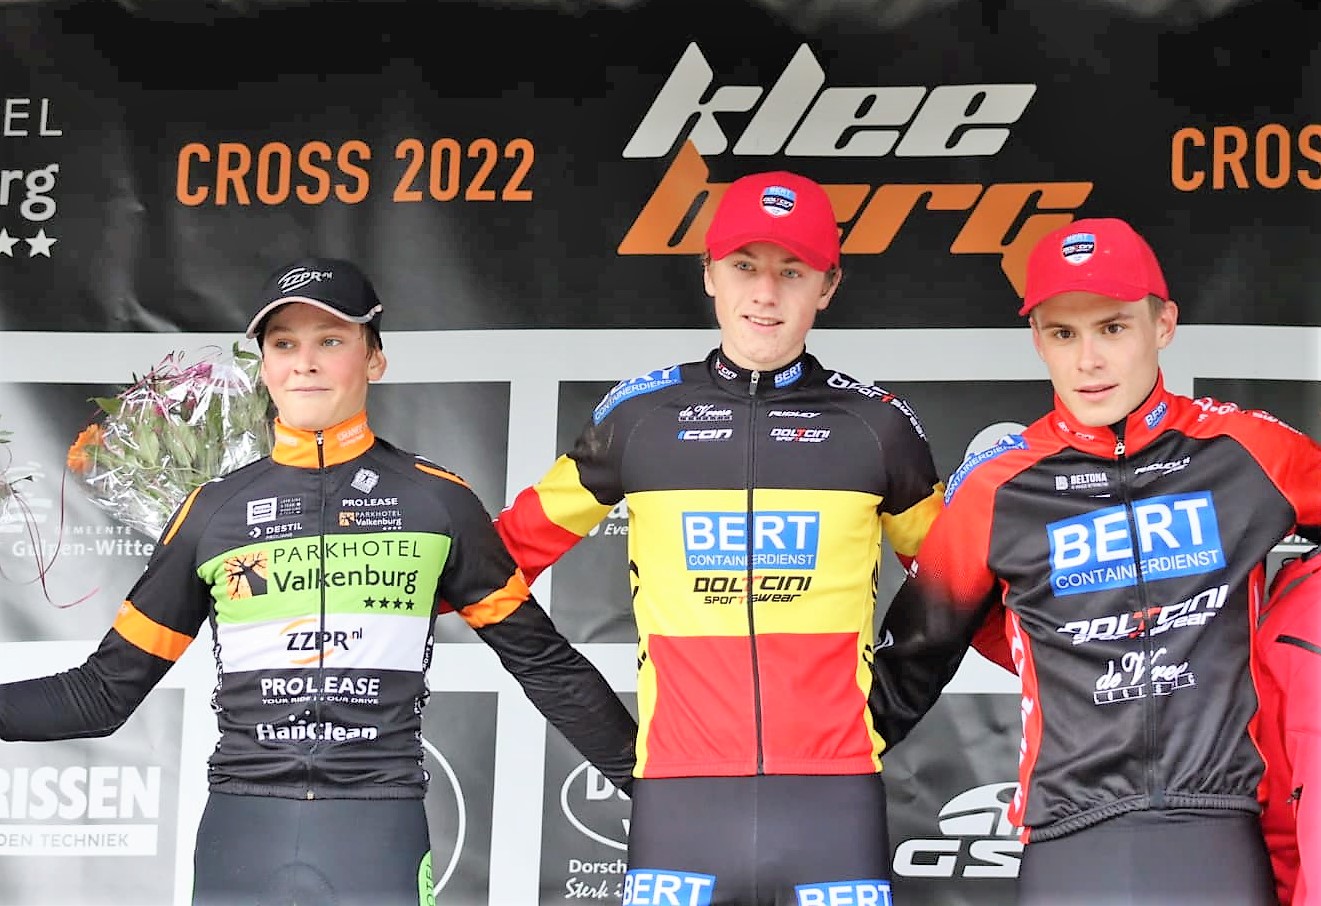 Kleebergcross 2022 juniores podium credit Bjorn.jpg (310 KB)